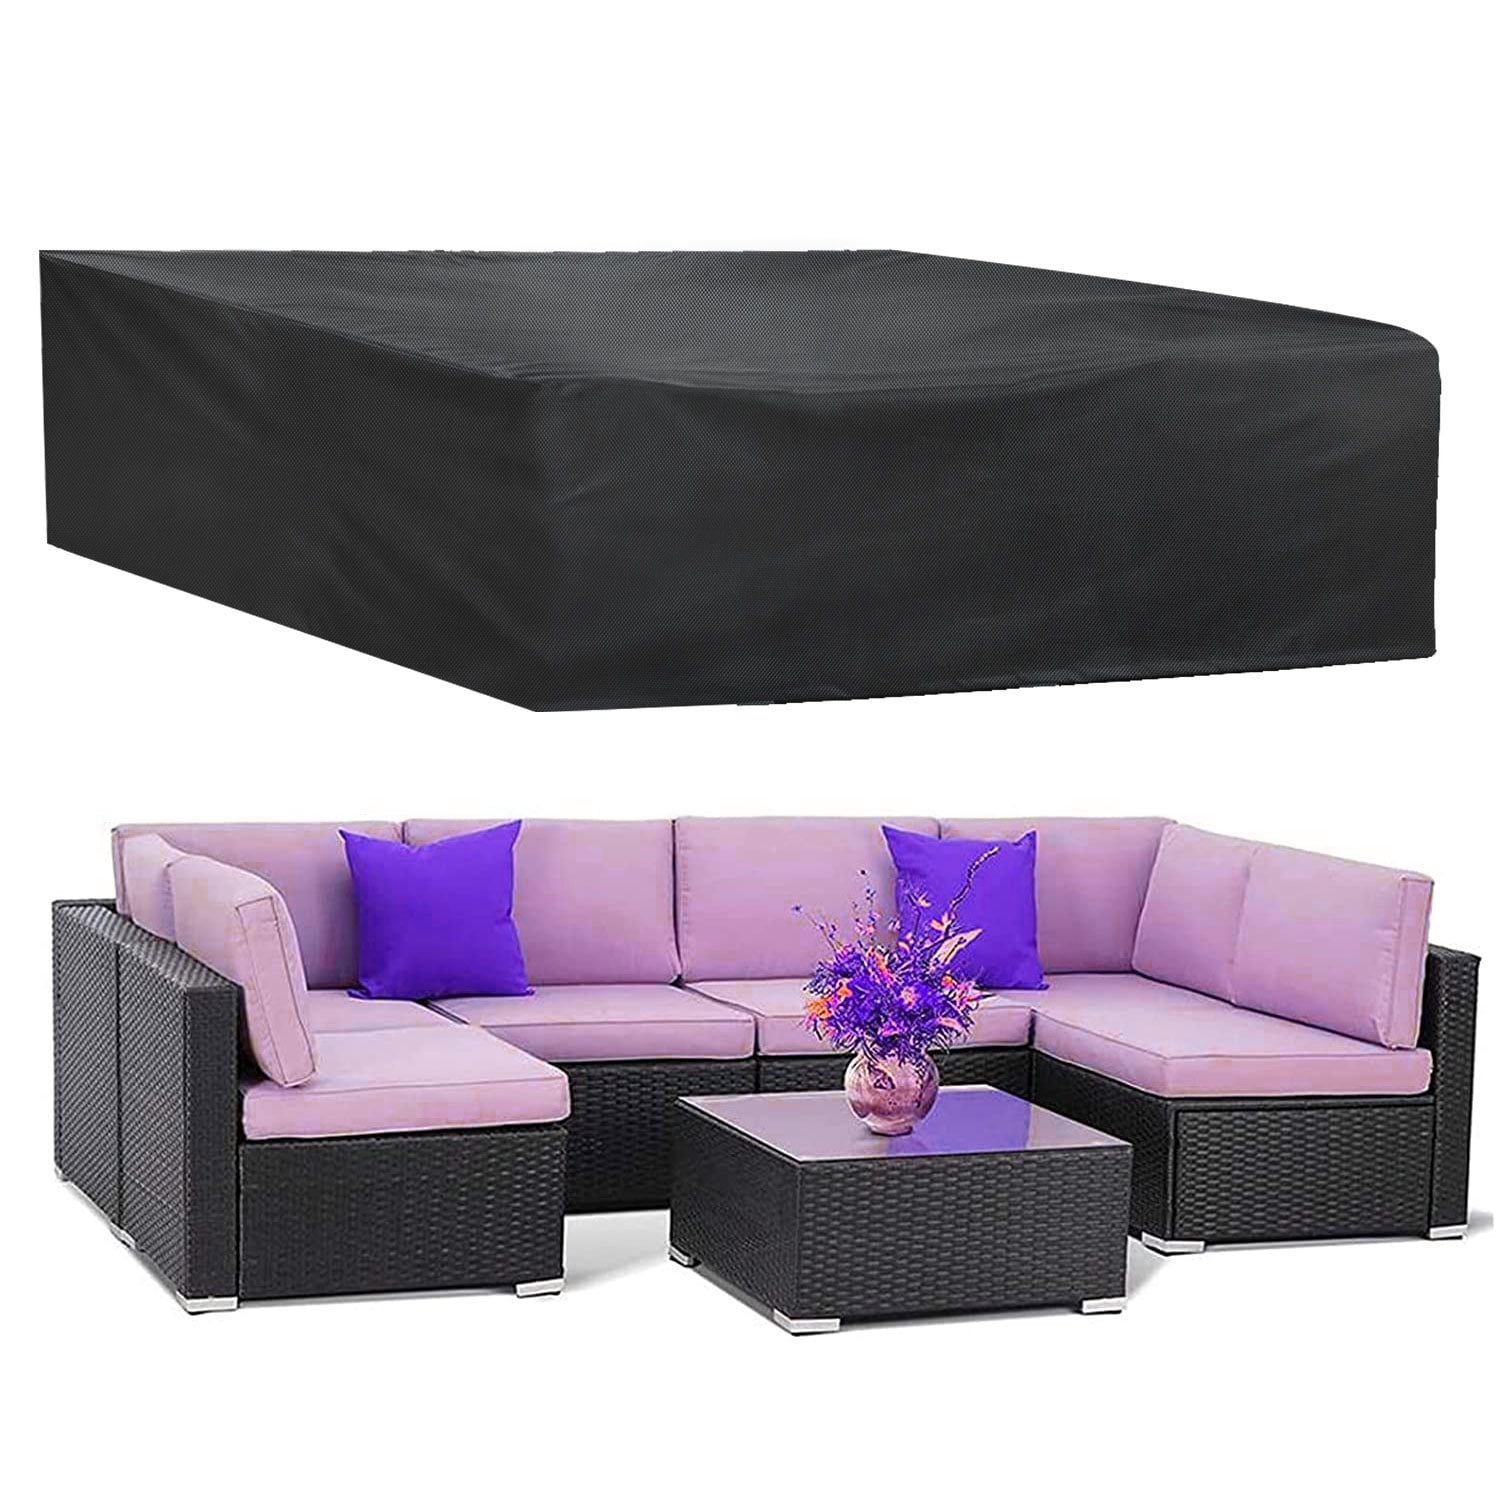 Outdoor Premium Waterproof Furniture Rectangular Patio Set Table Chair Cover M 